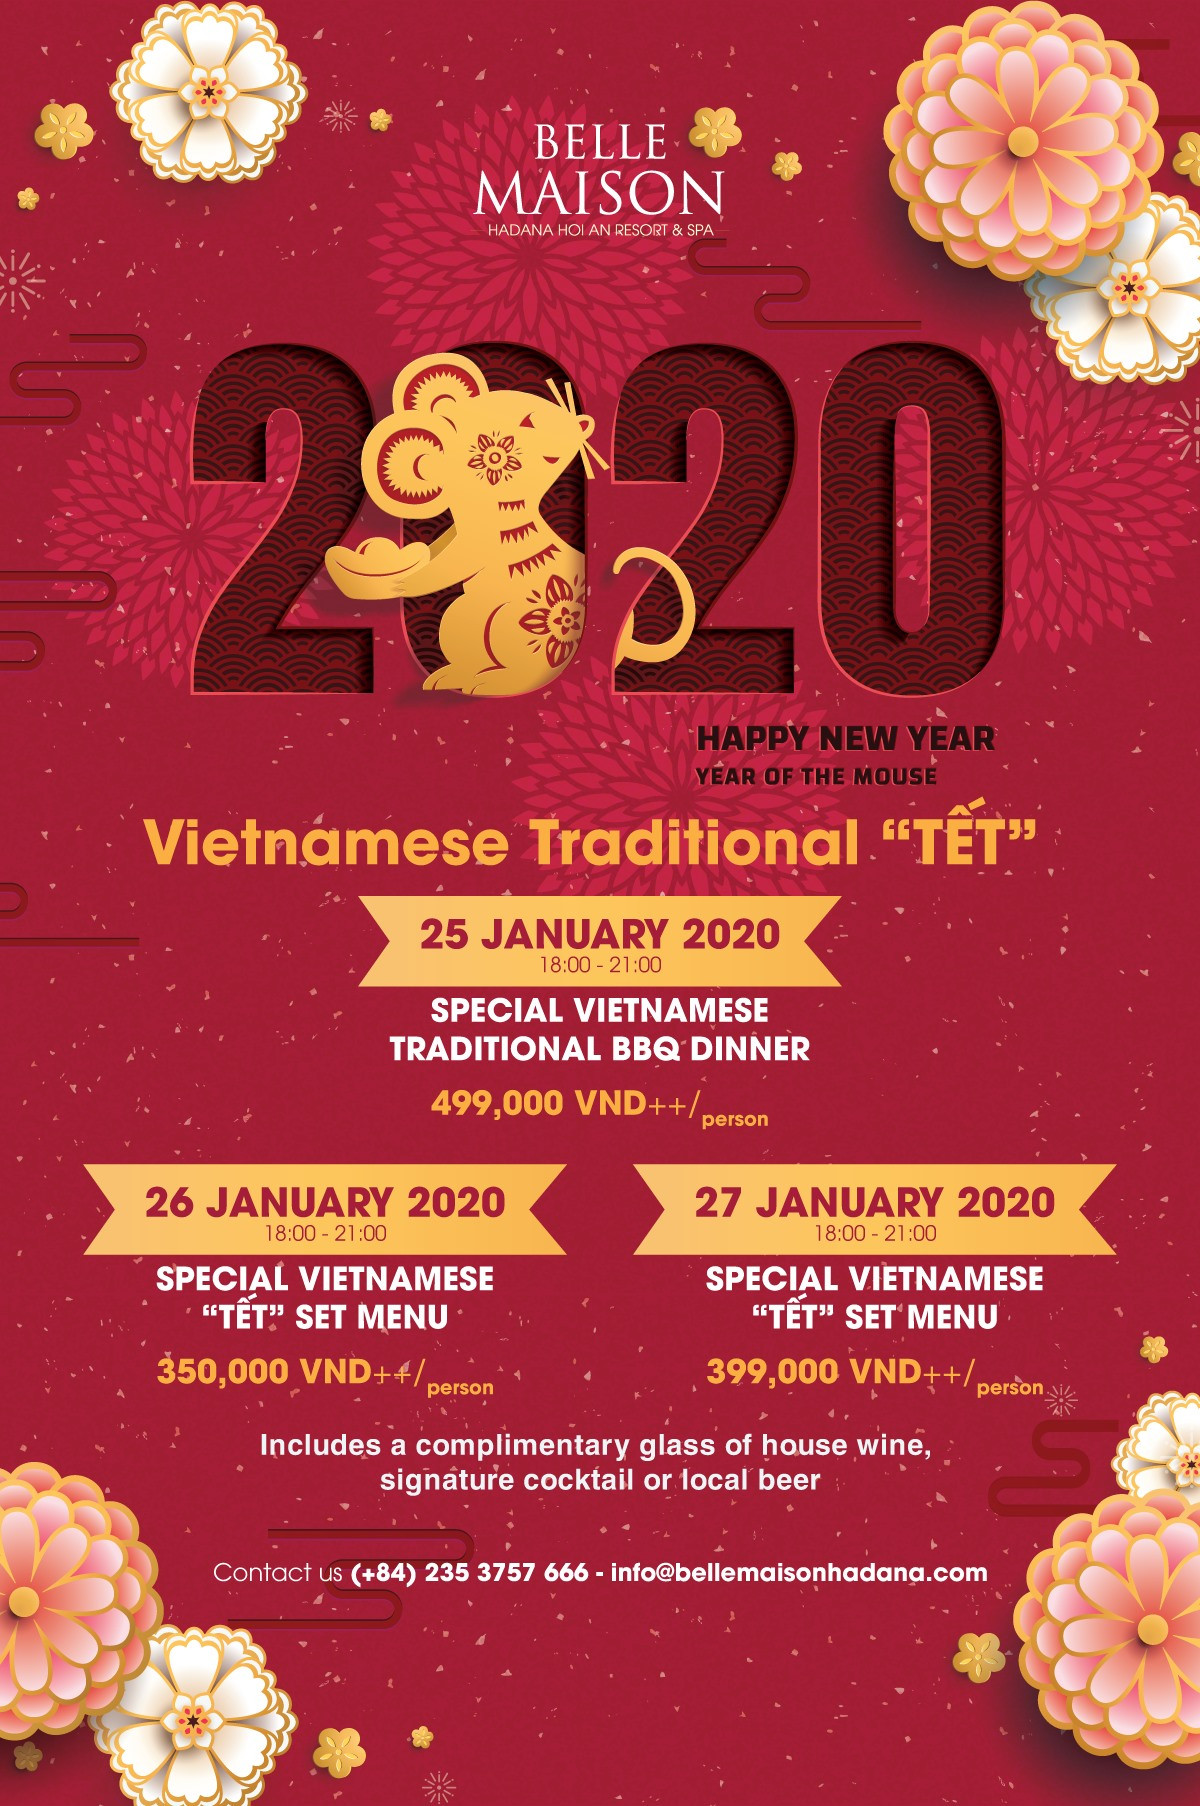 Belle Maison Vietnamese Traditional Tet 2020